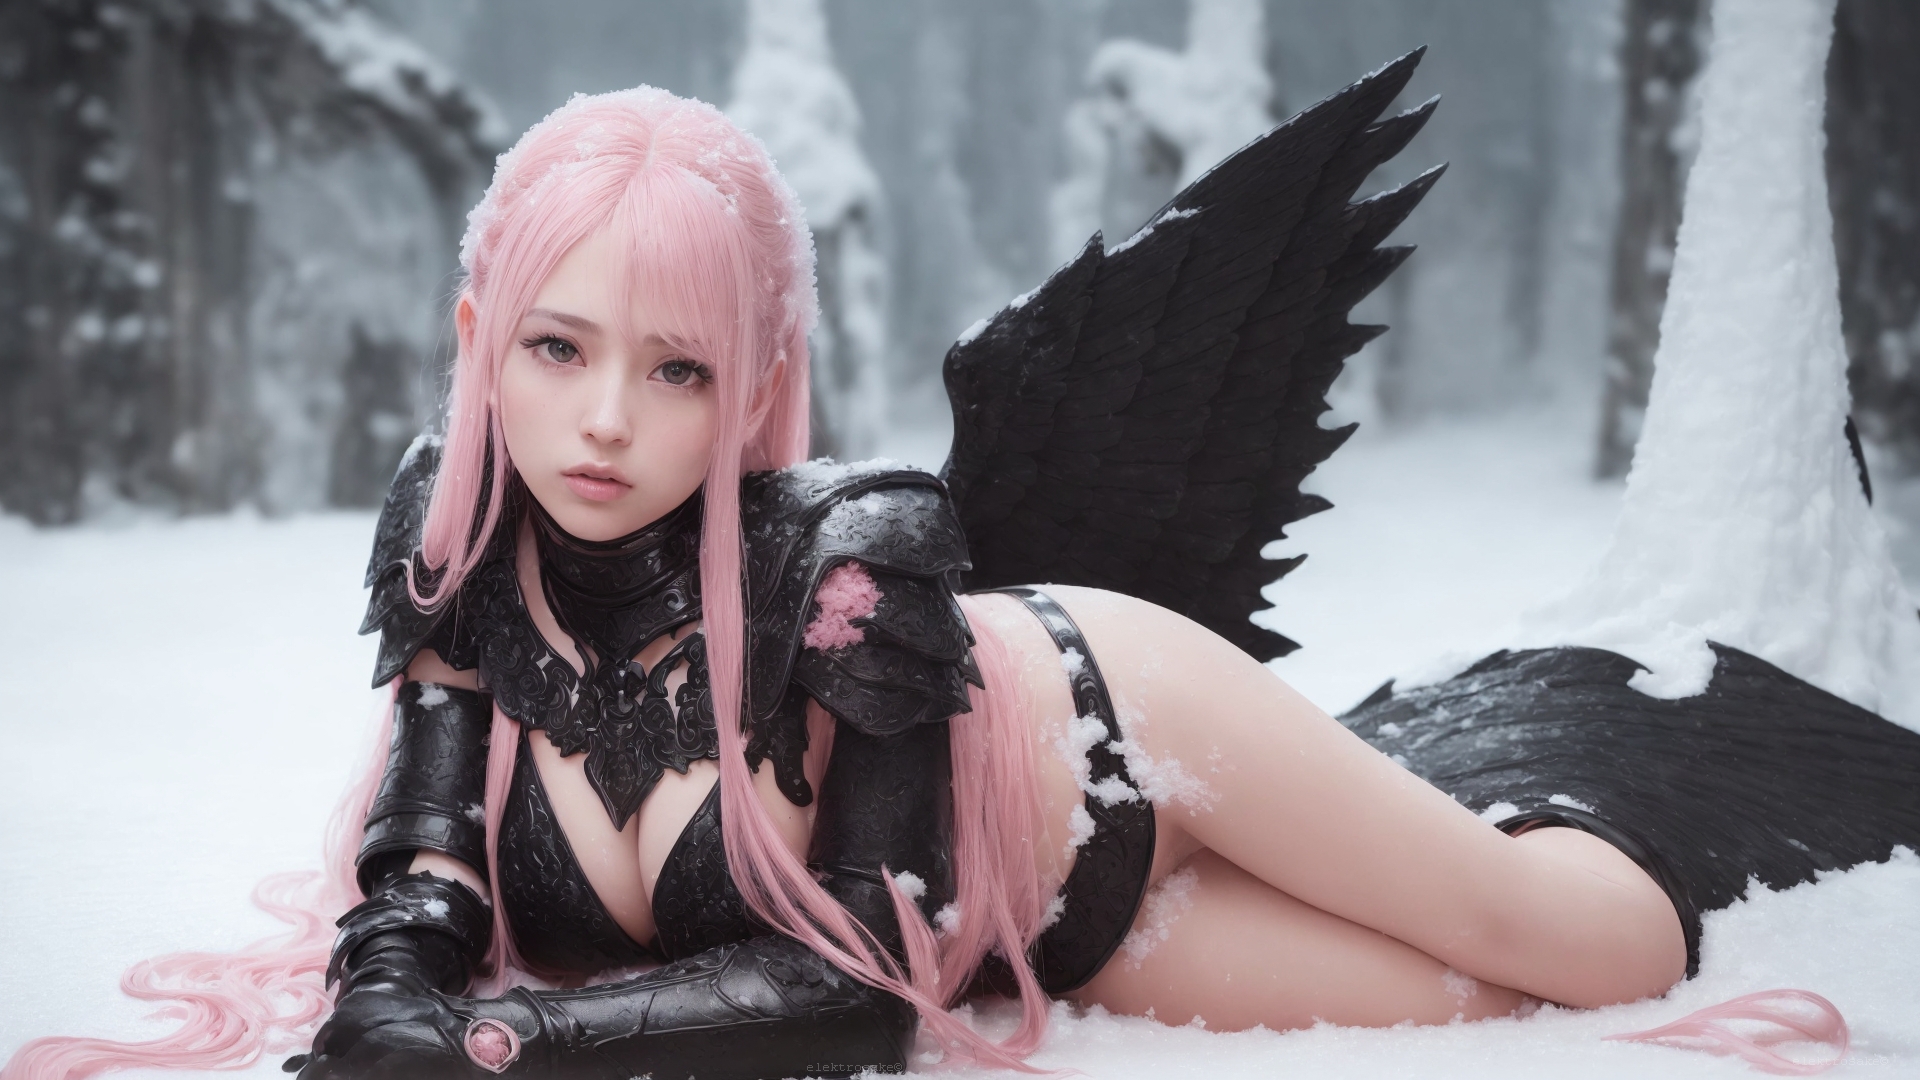 General 1920x1080 digital art fantasy art pink hair black armor female warrior anime girl with wings snow covered angel fan art Heaven and Hell women AI art Asian